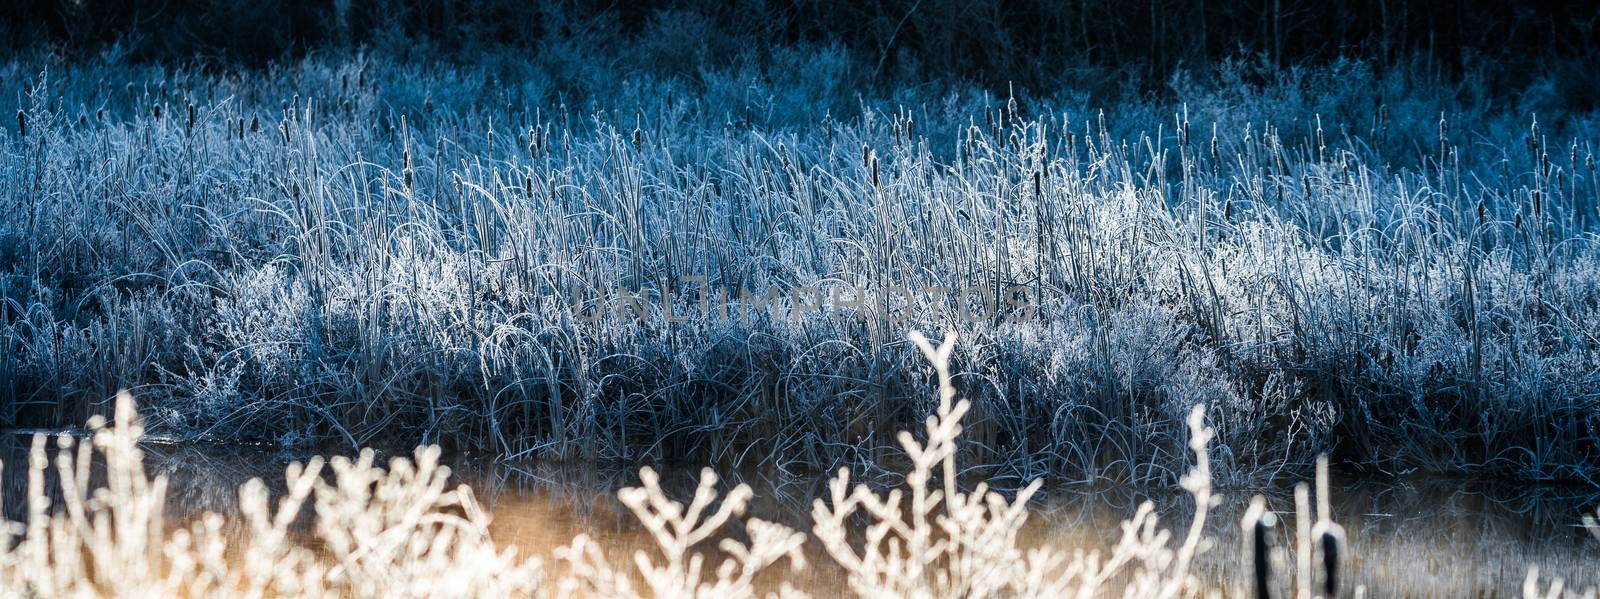 Bluegrass light in November morning frost. by valleyboi63